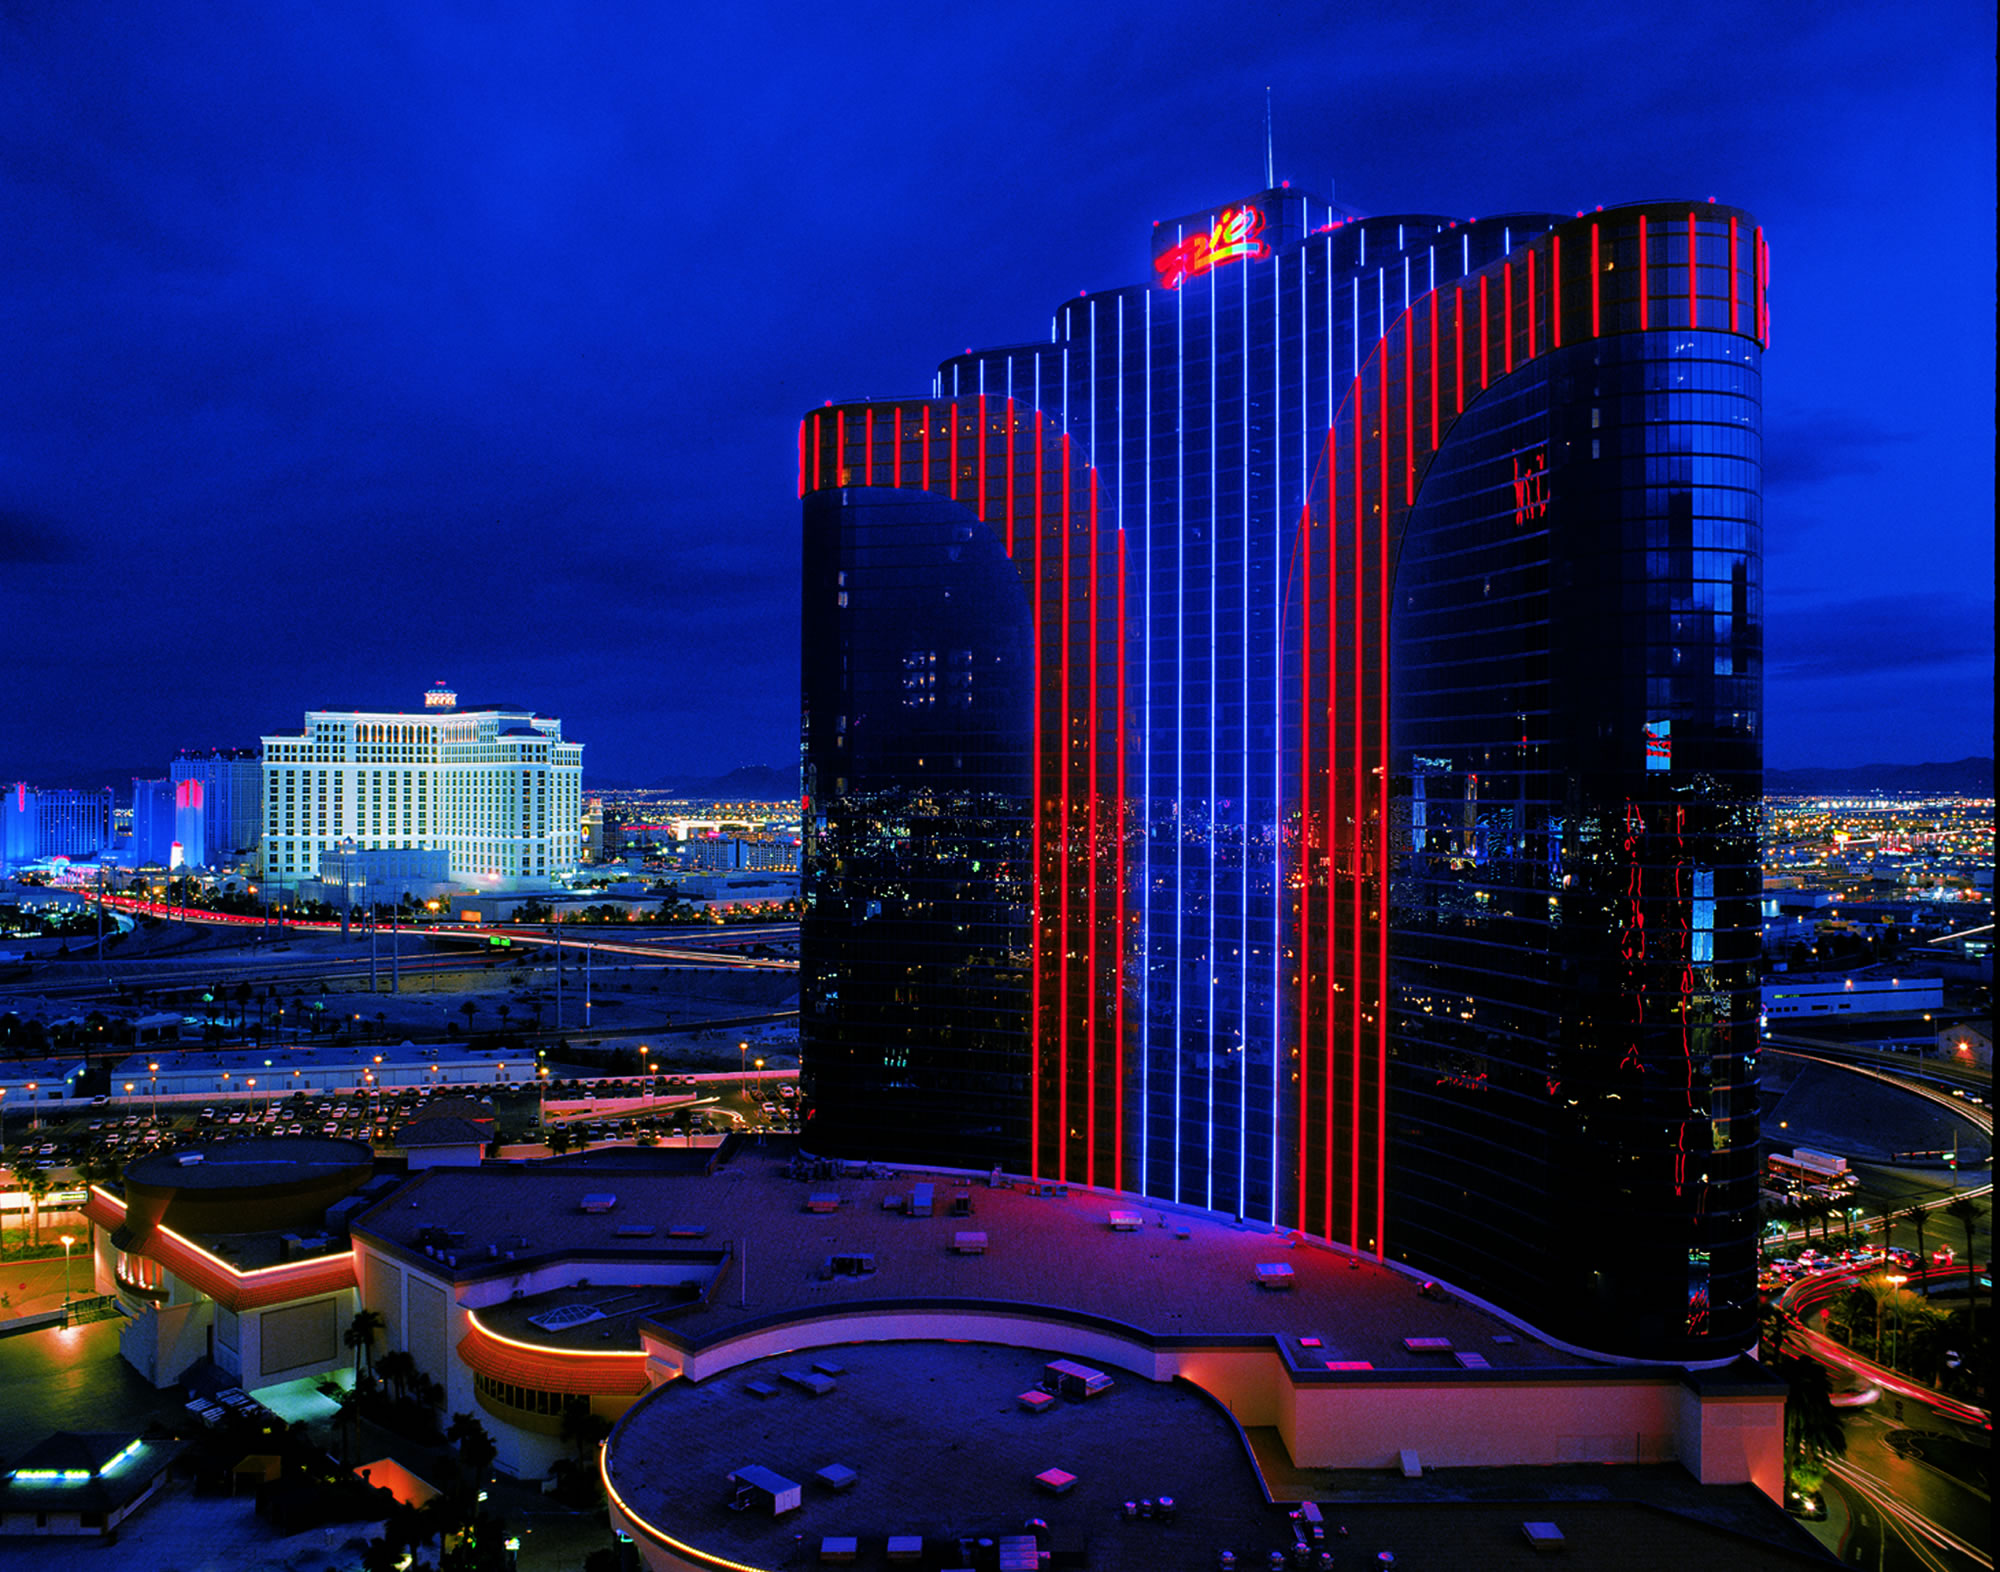 Rio Hotel Vegas